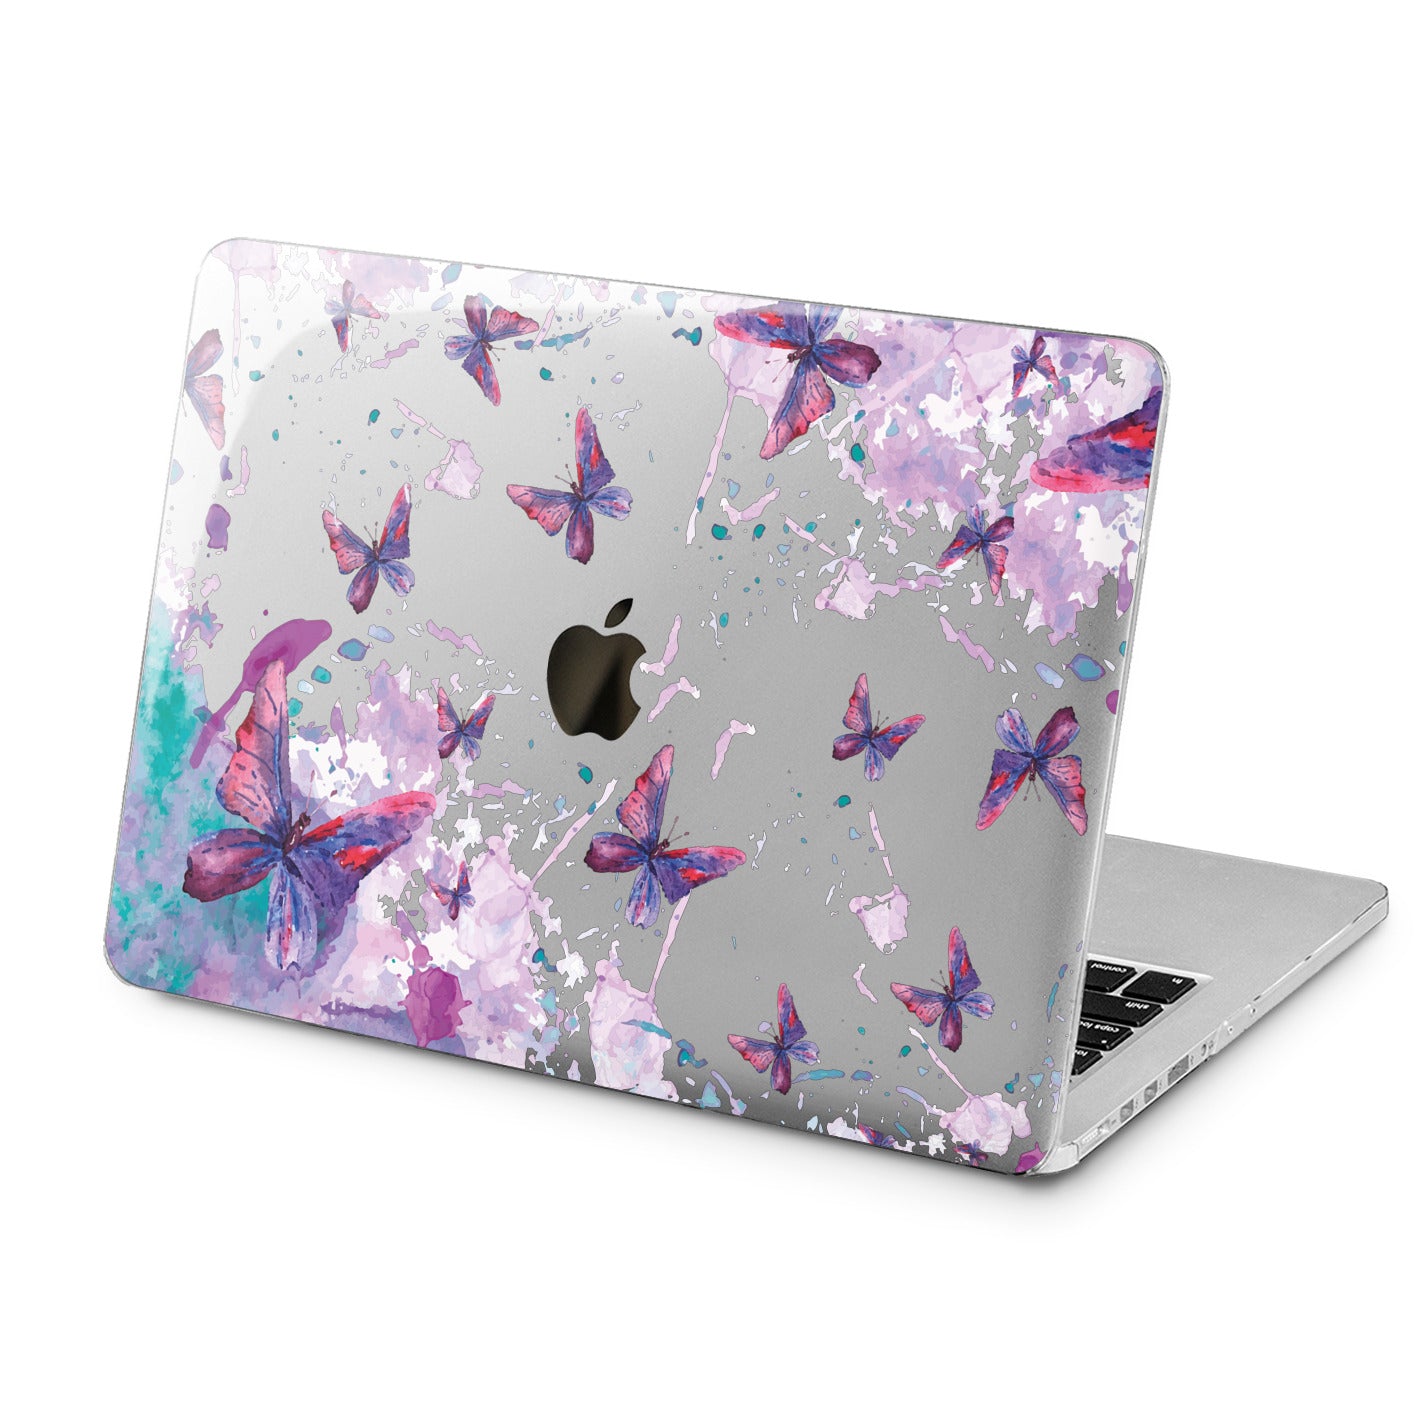 Lex Altern Lex Altern Butterfly Watercolor Case for your Laptop Apple Macbook.